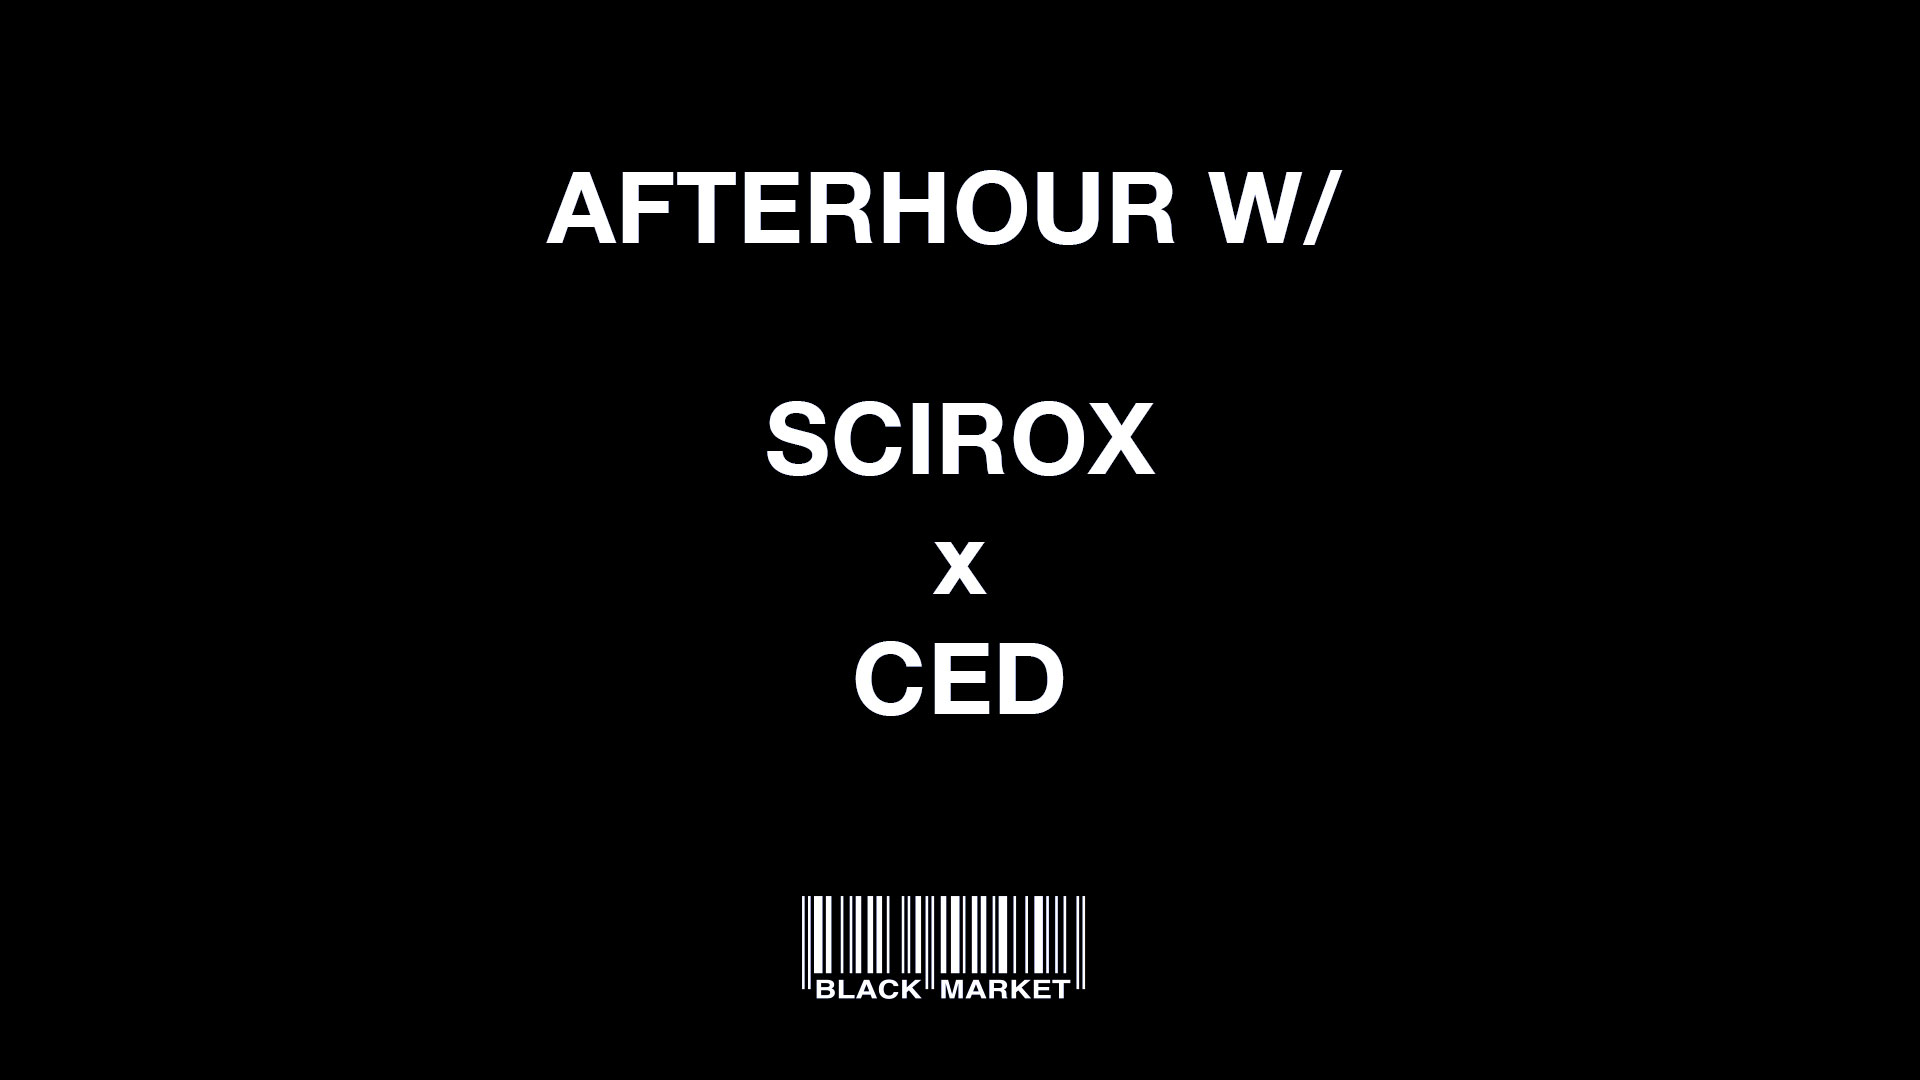 Afterhour w / Scirox x CED am 15. March 2020 @ Black Market.